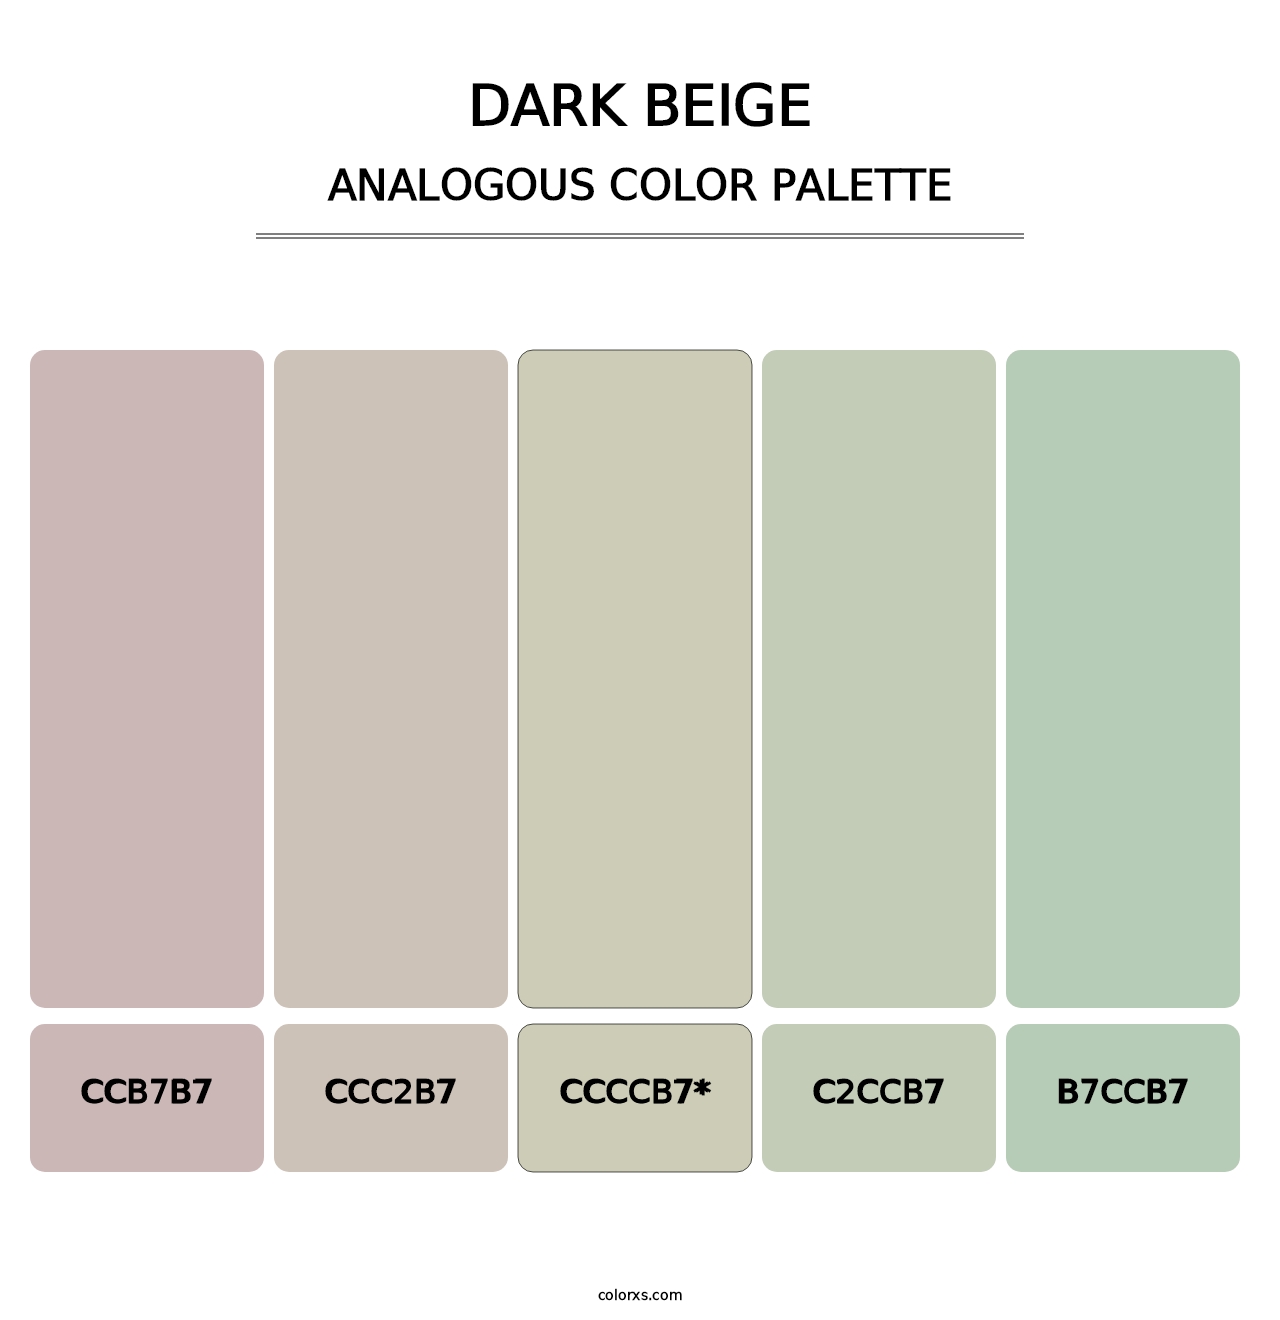 Dark Beige - Analogous Color Palette